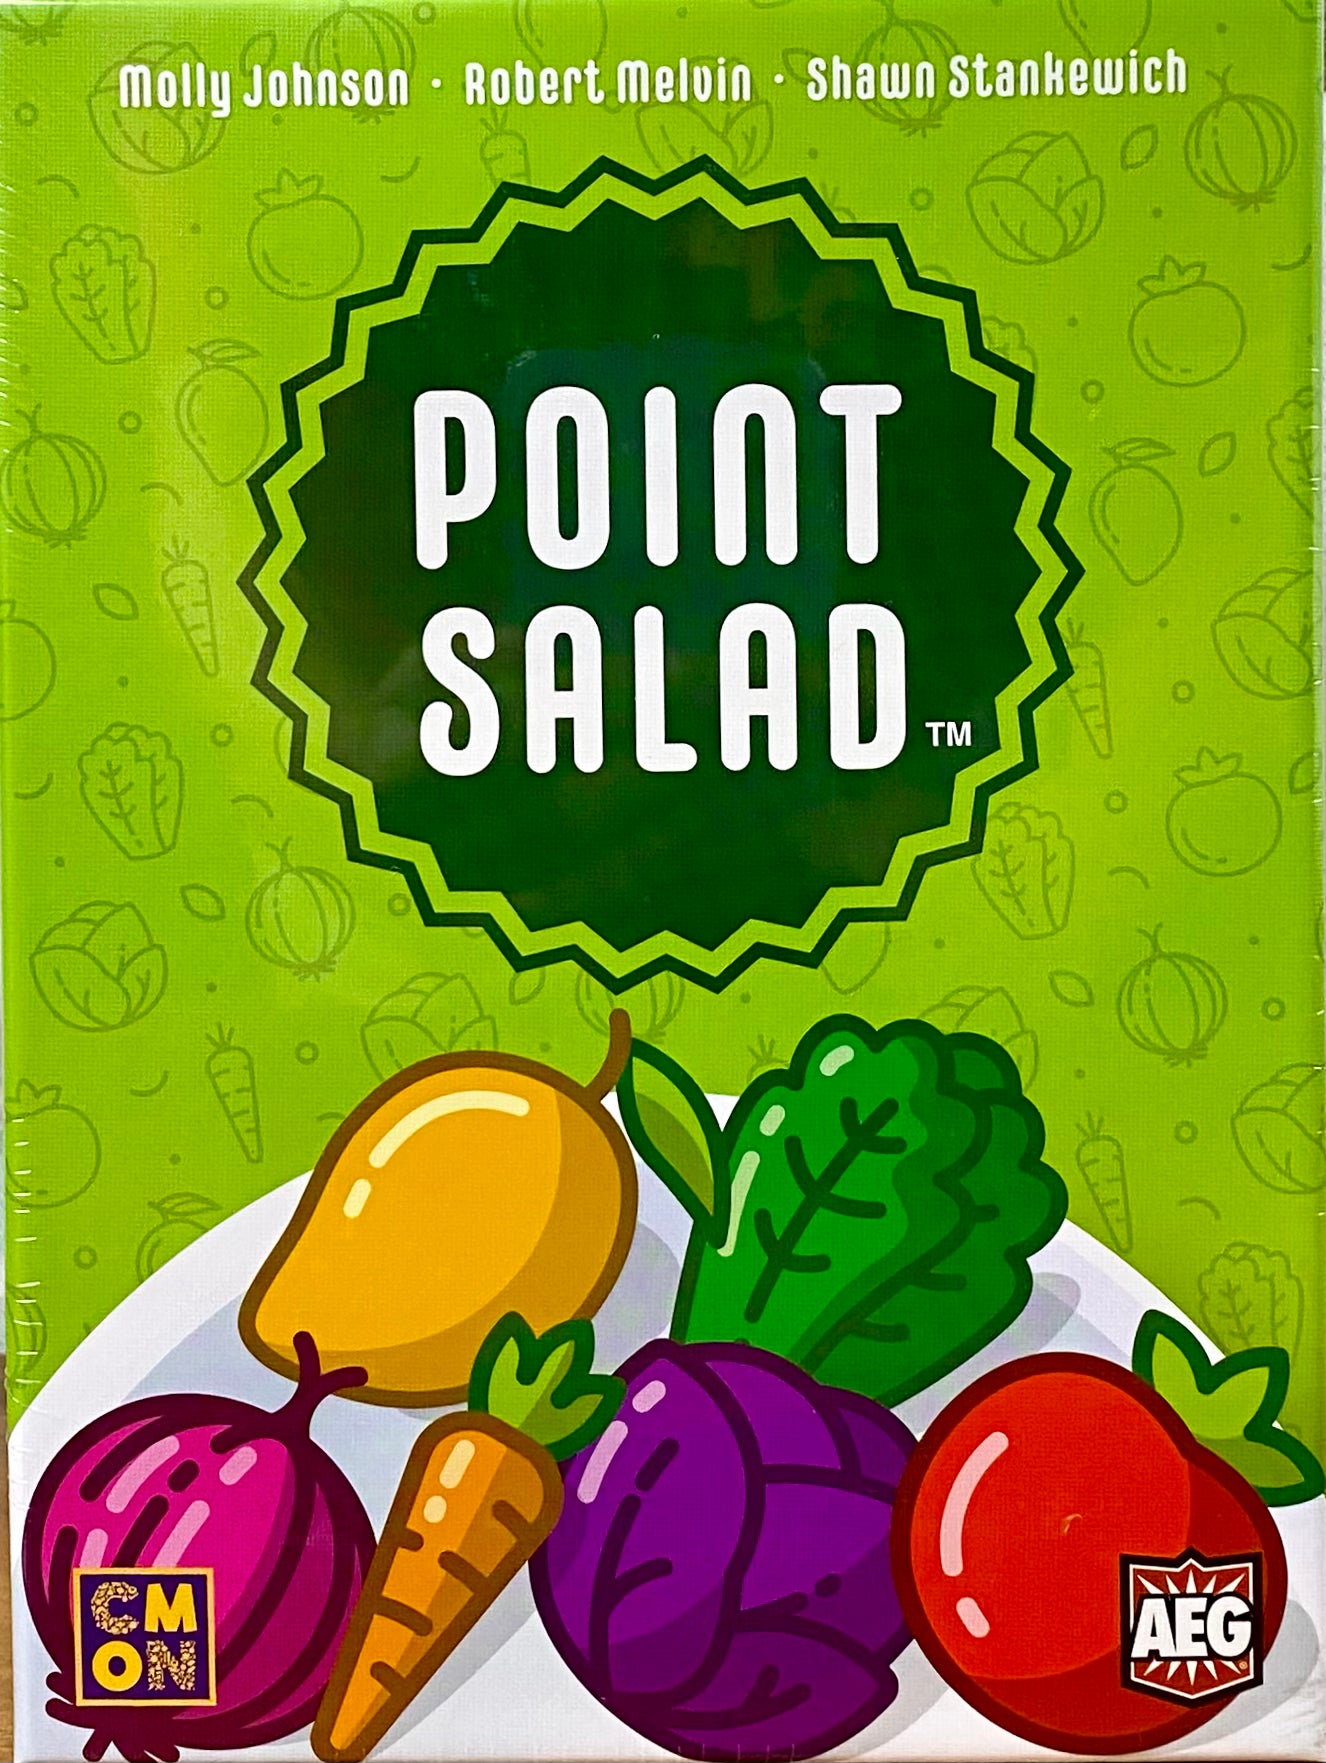 Point Salad